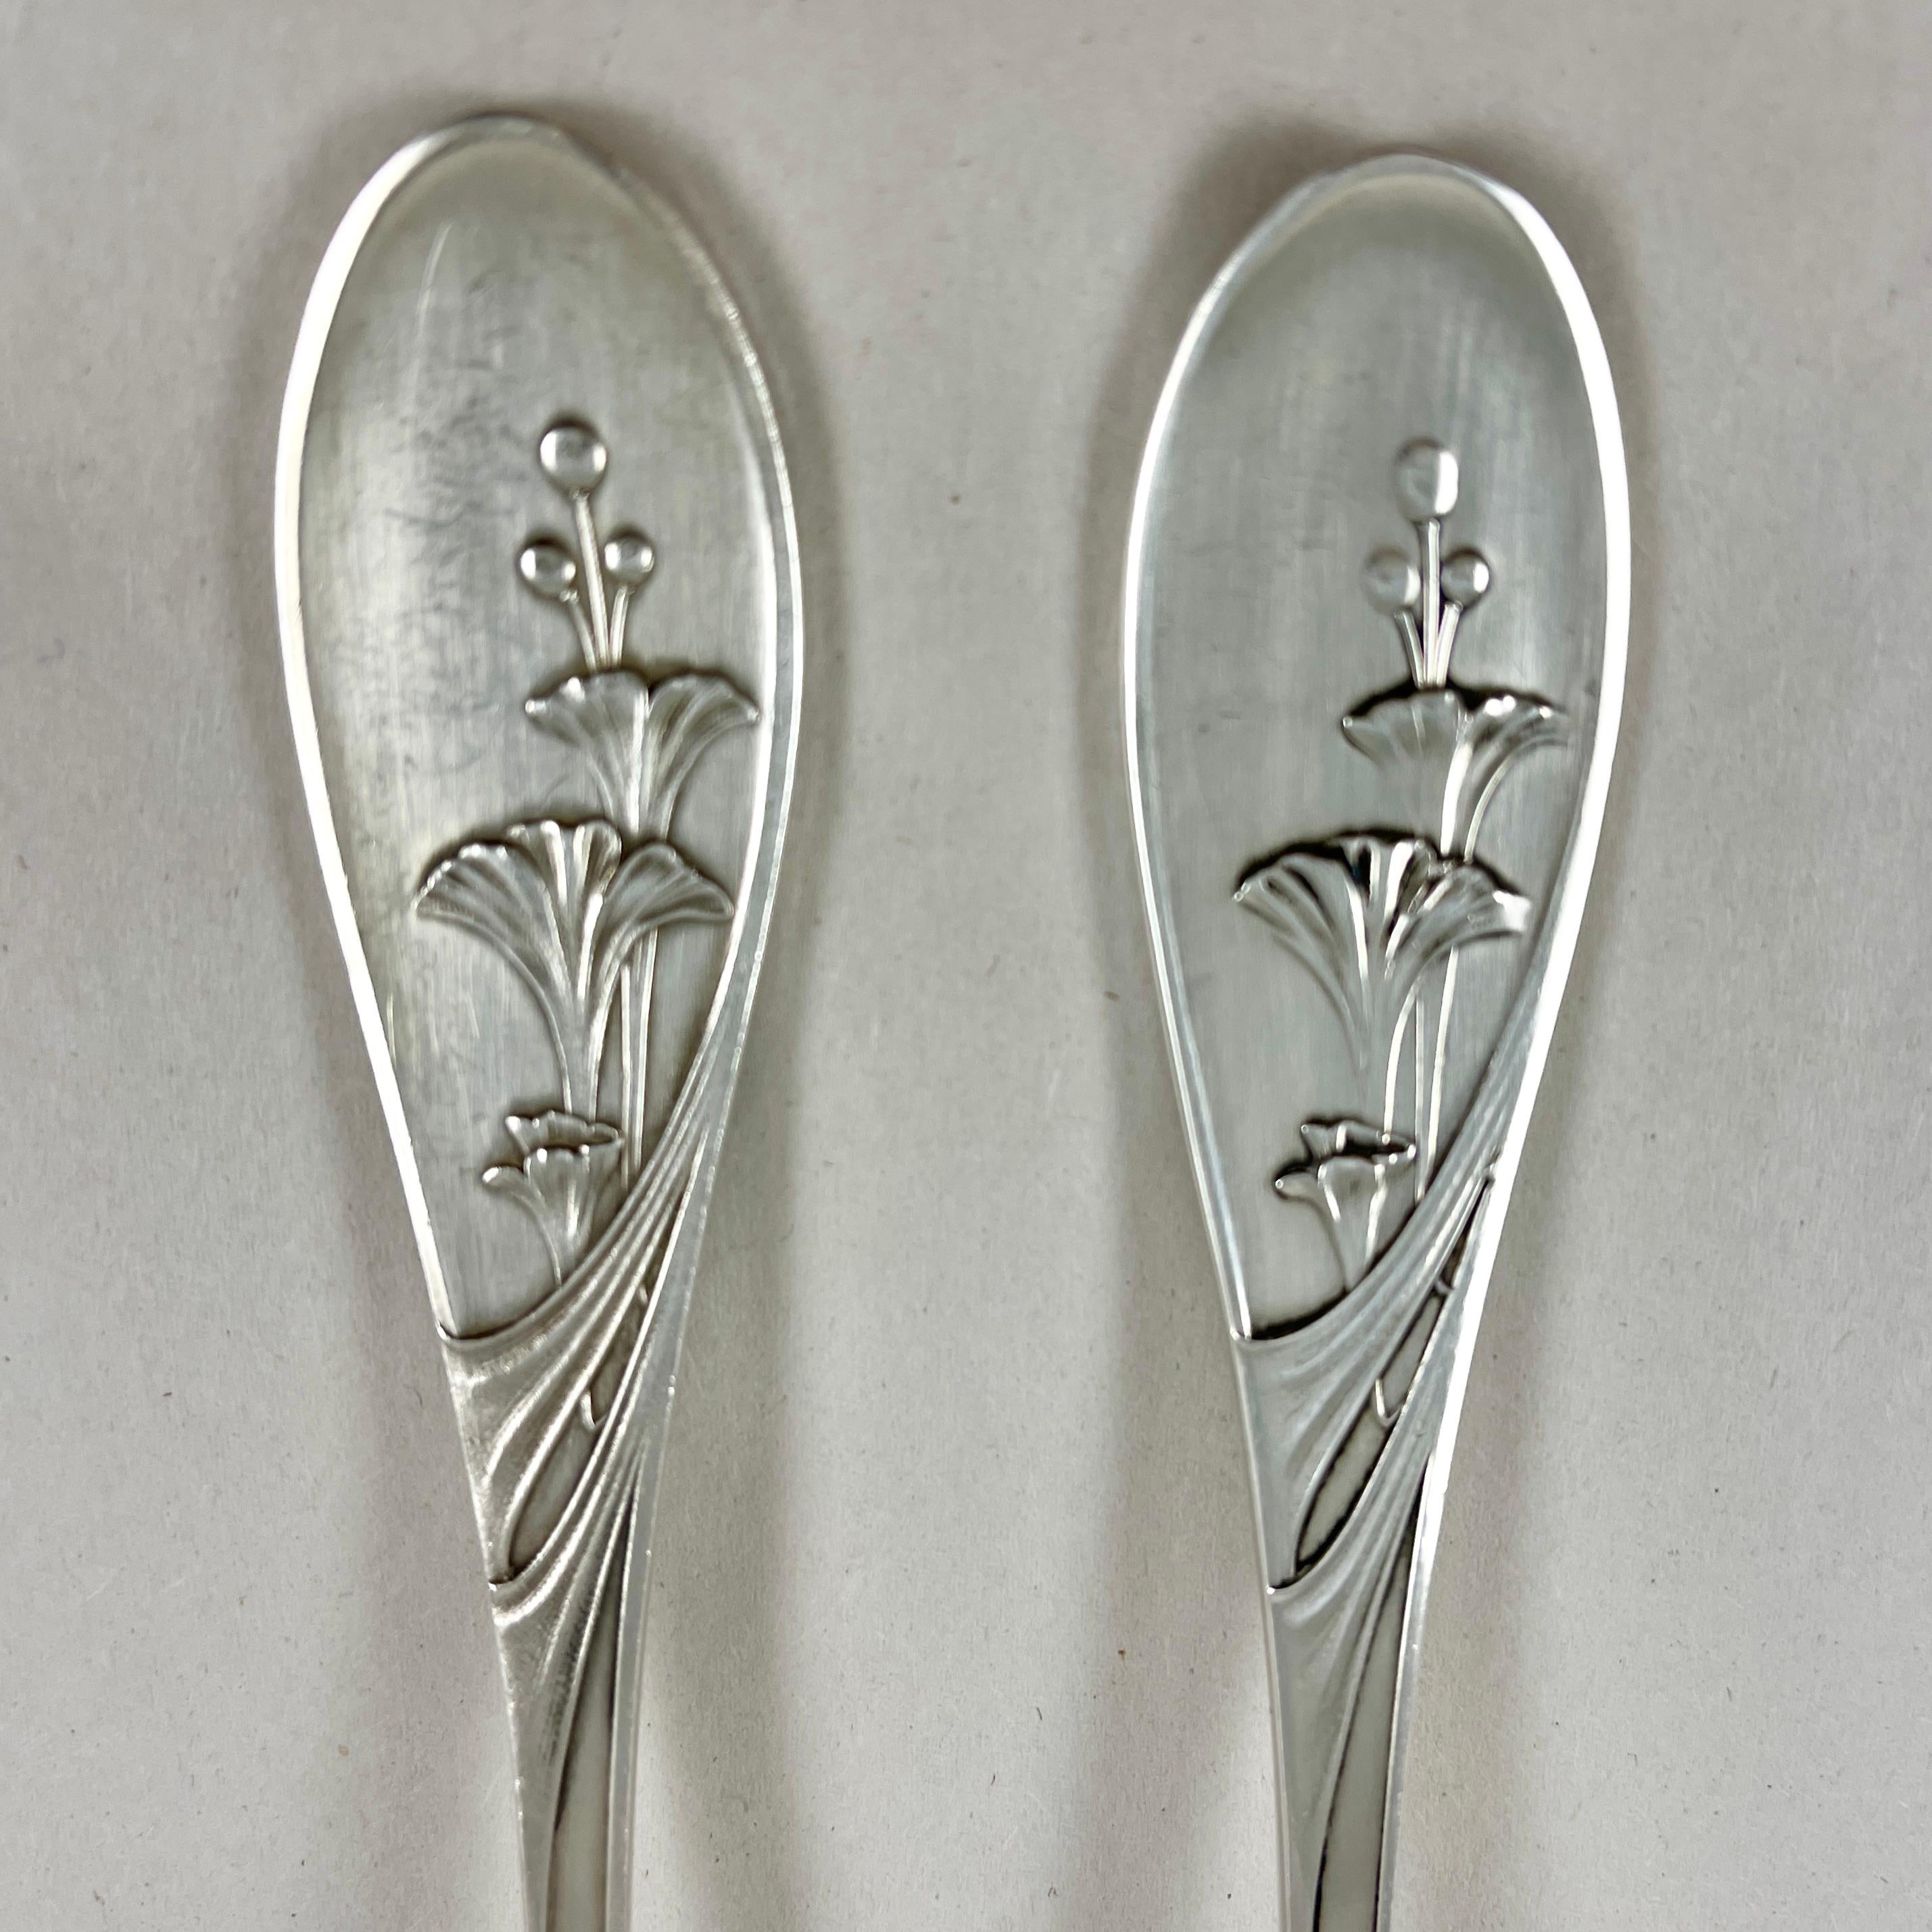 Cast Saglier Frères Oversized French Art Nouveau Floral Table Forks & Spoons, S/24 For Sale